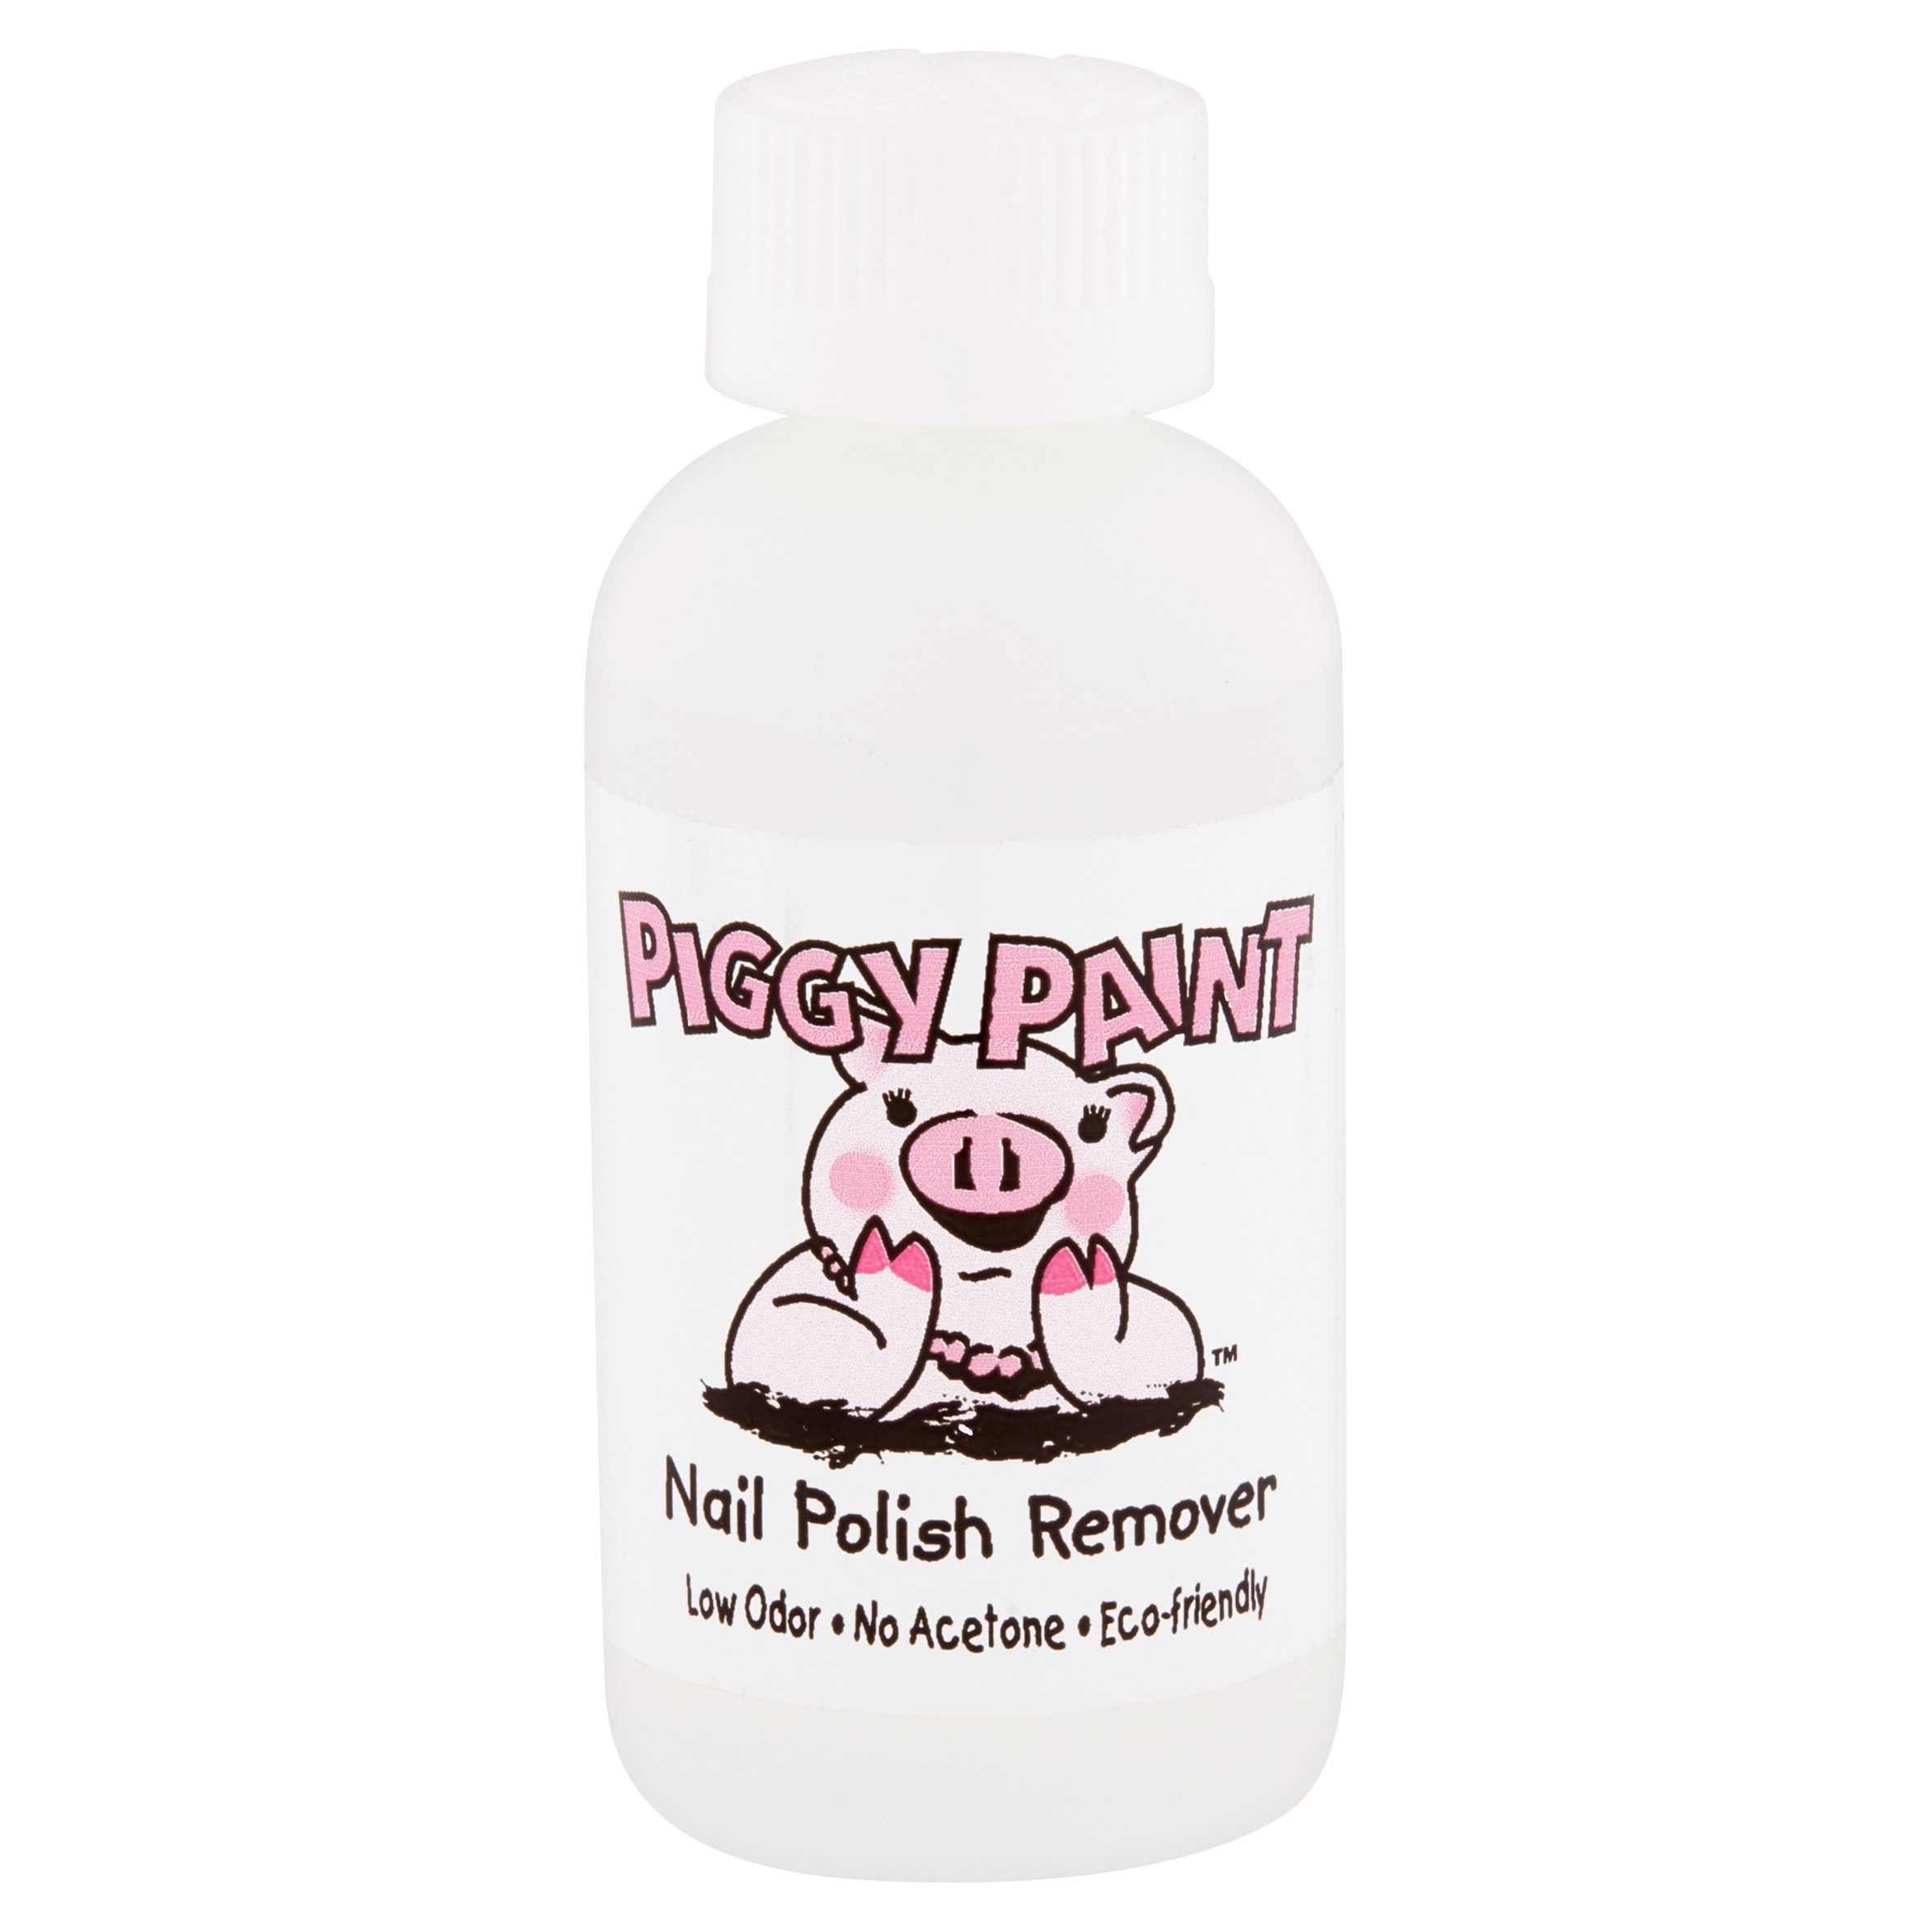 Piggy Paint Nail Polish Remover, 2 fl oz - image 2 of 2